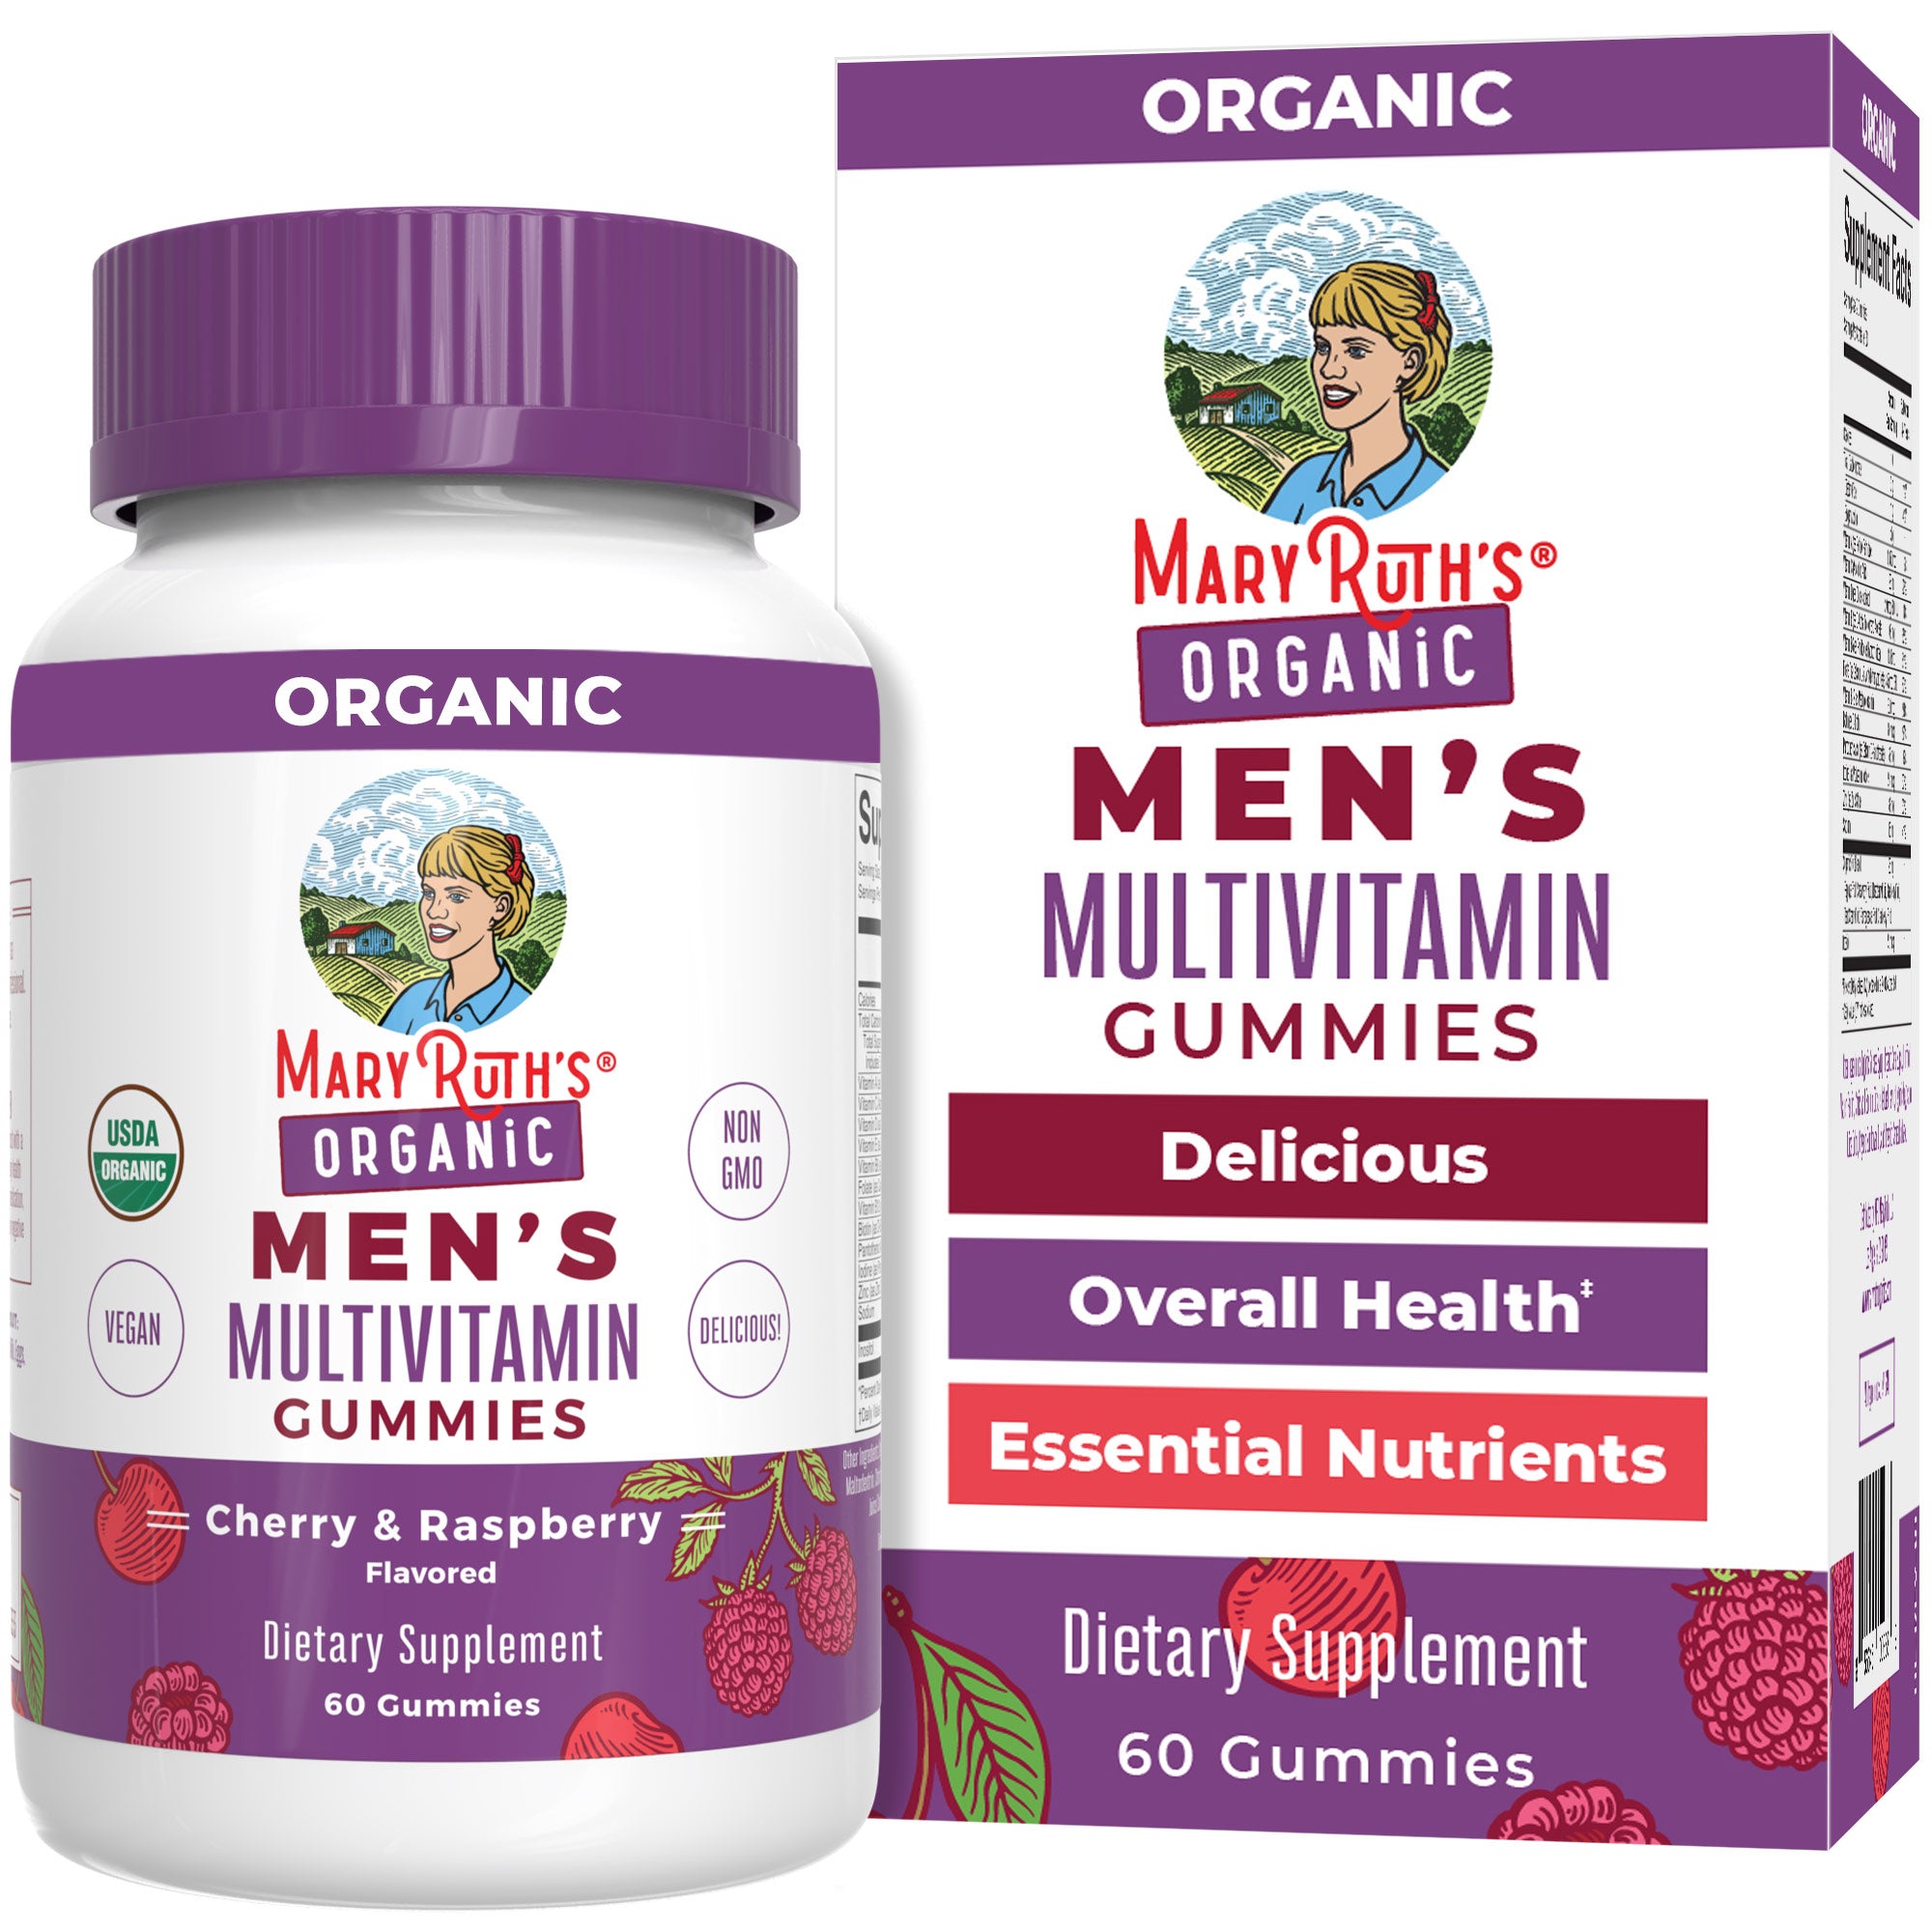 Organic Men’s Multivitamin Gummies